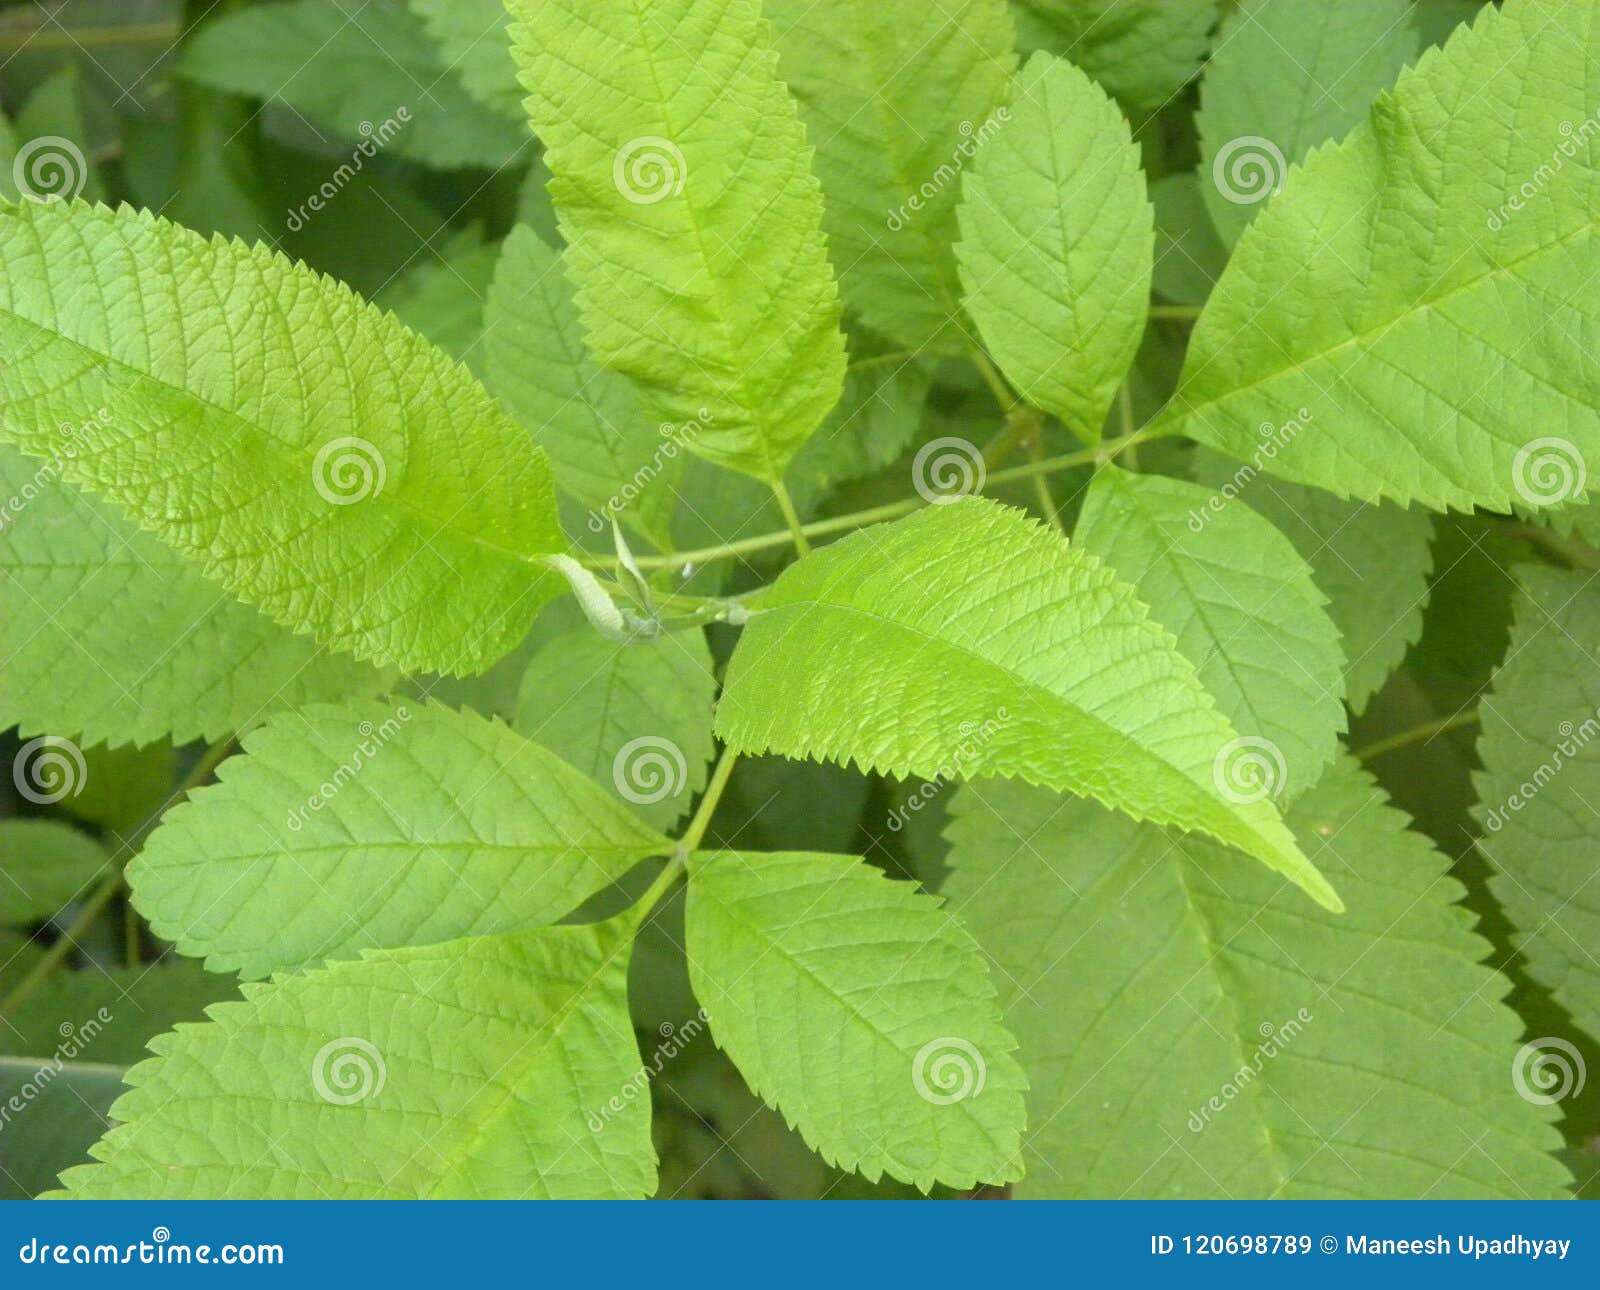 green color leaves of slippery elm tree